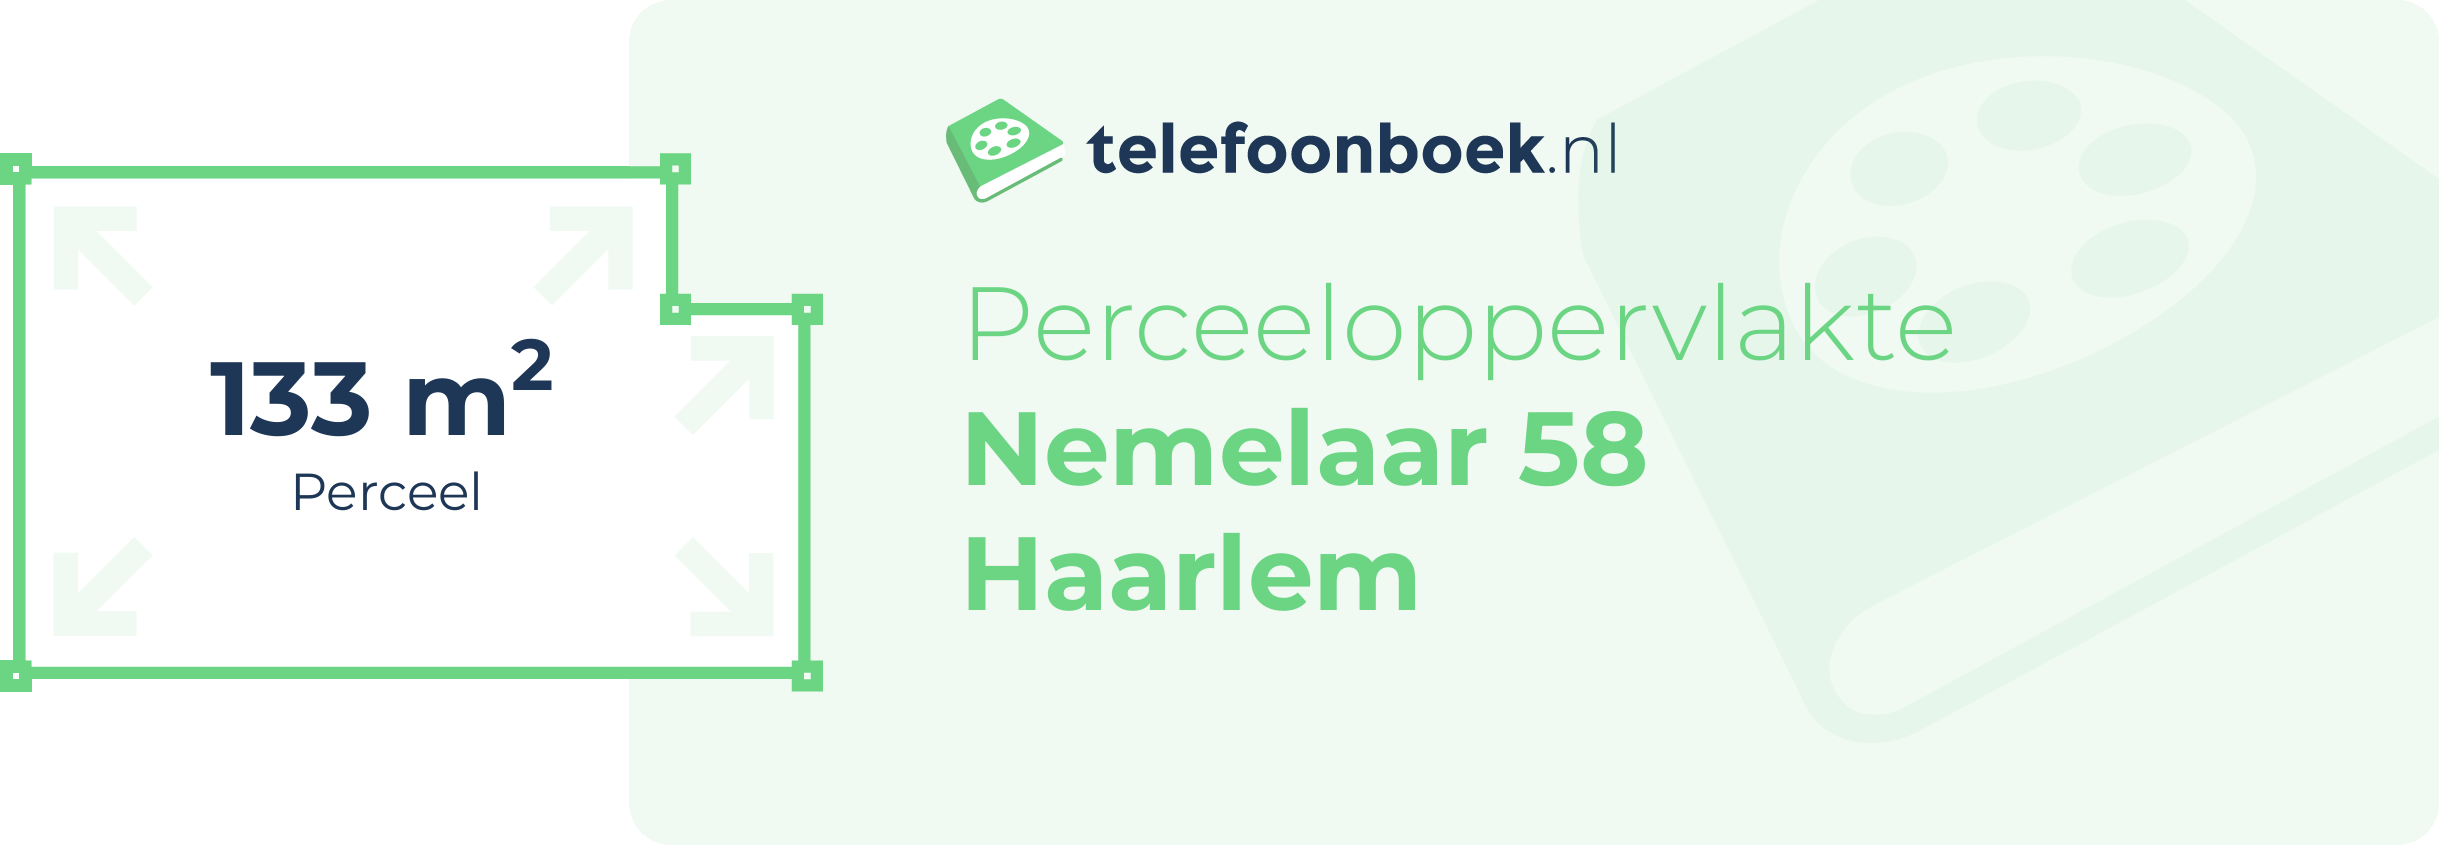 Perceeloppervlakte Nemelaar 58 Haarlem